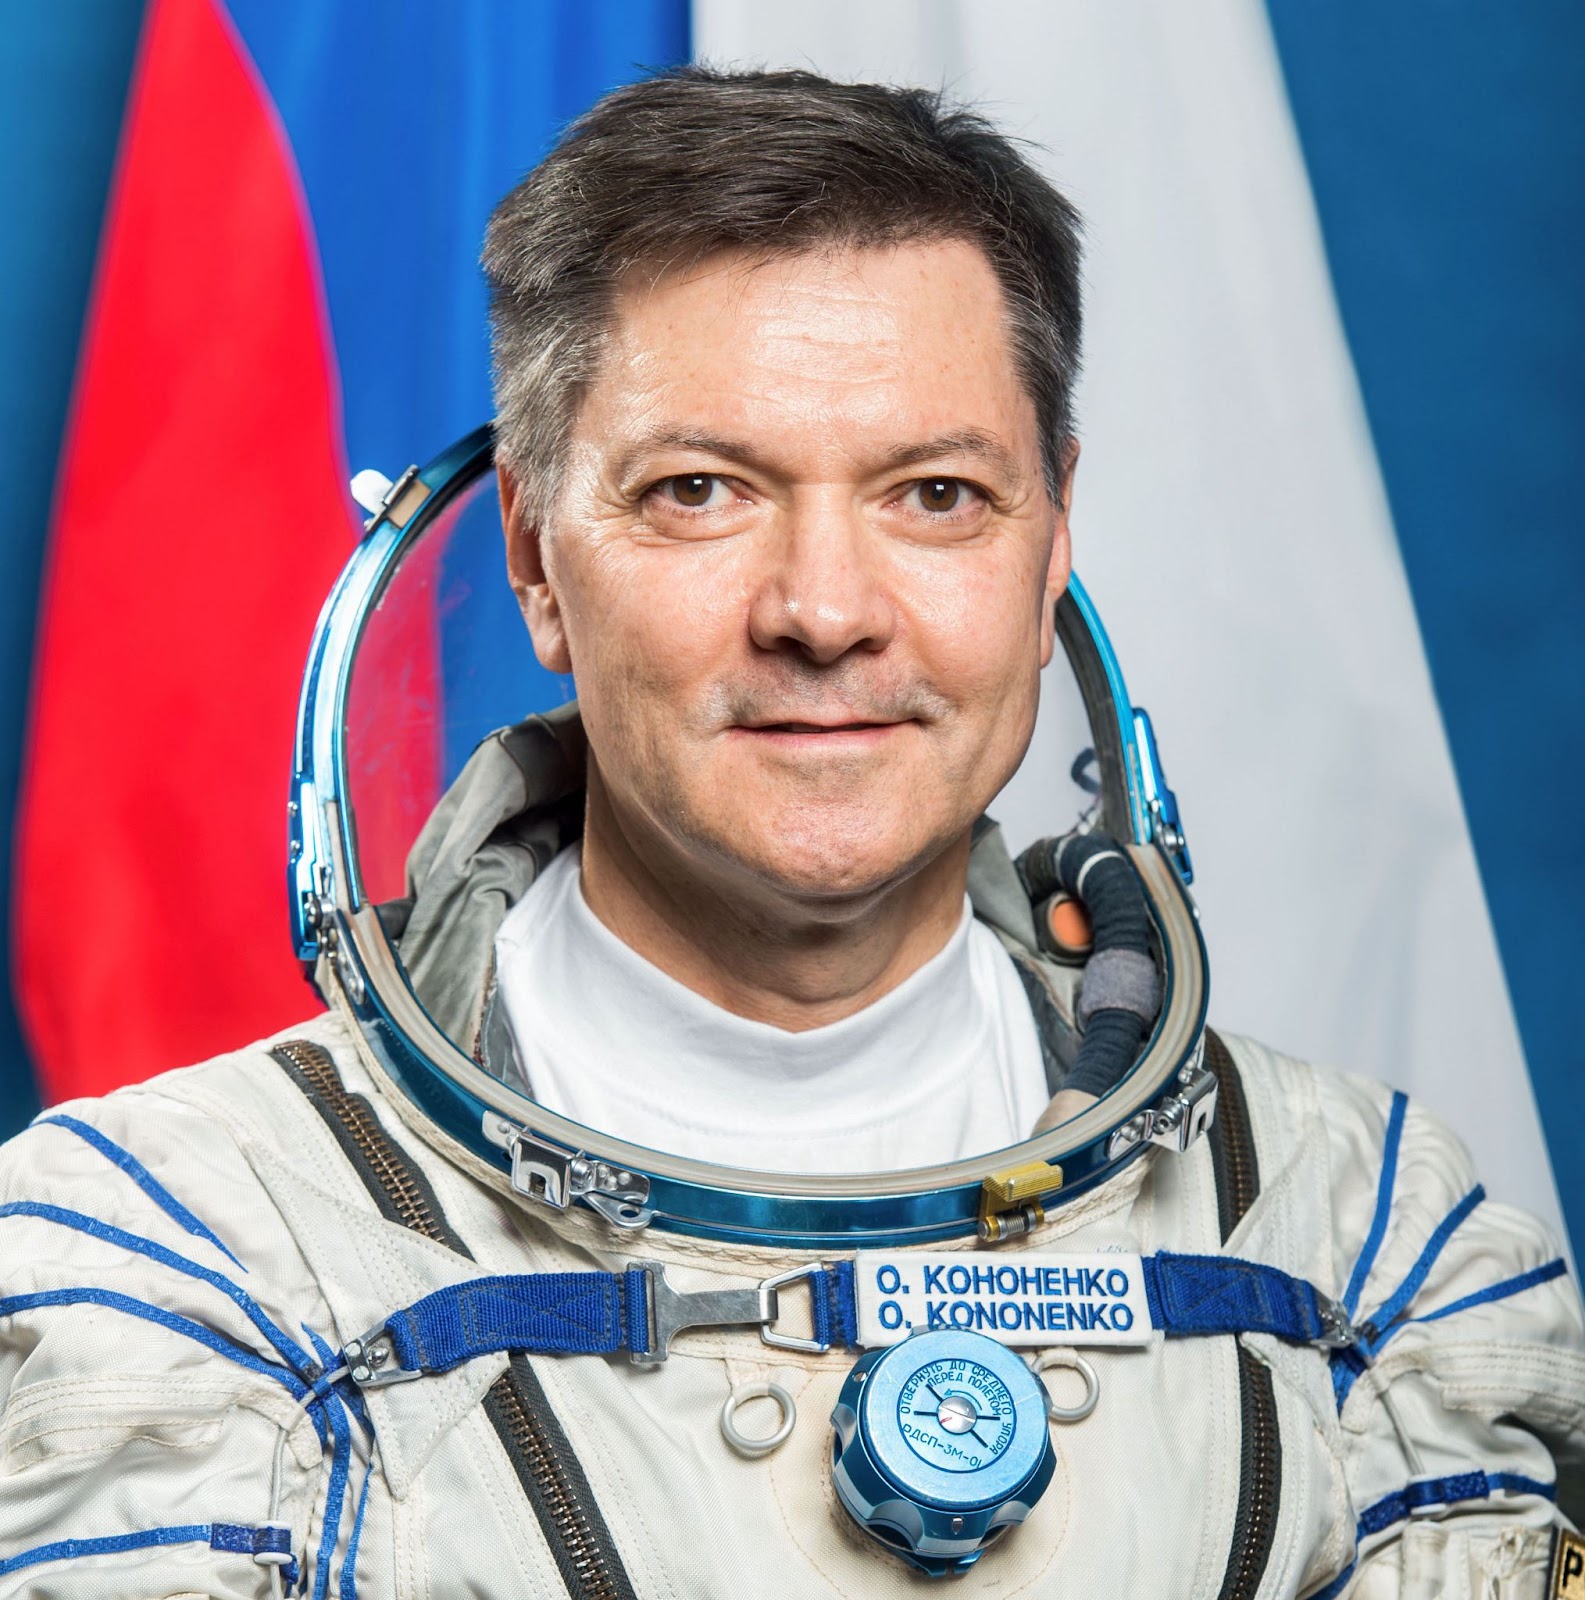 Cosmonaut Oleg Kononenko posing for a photo